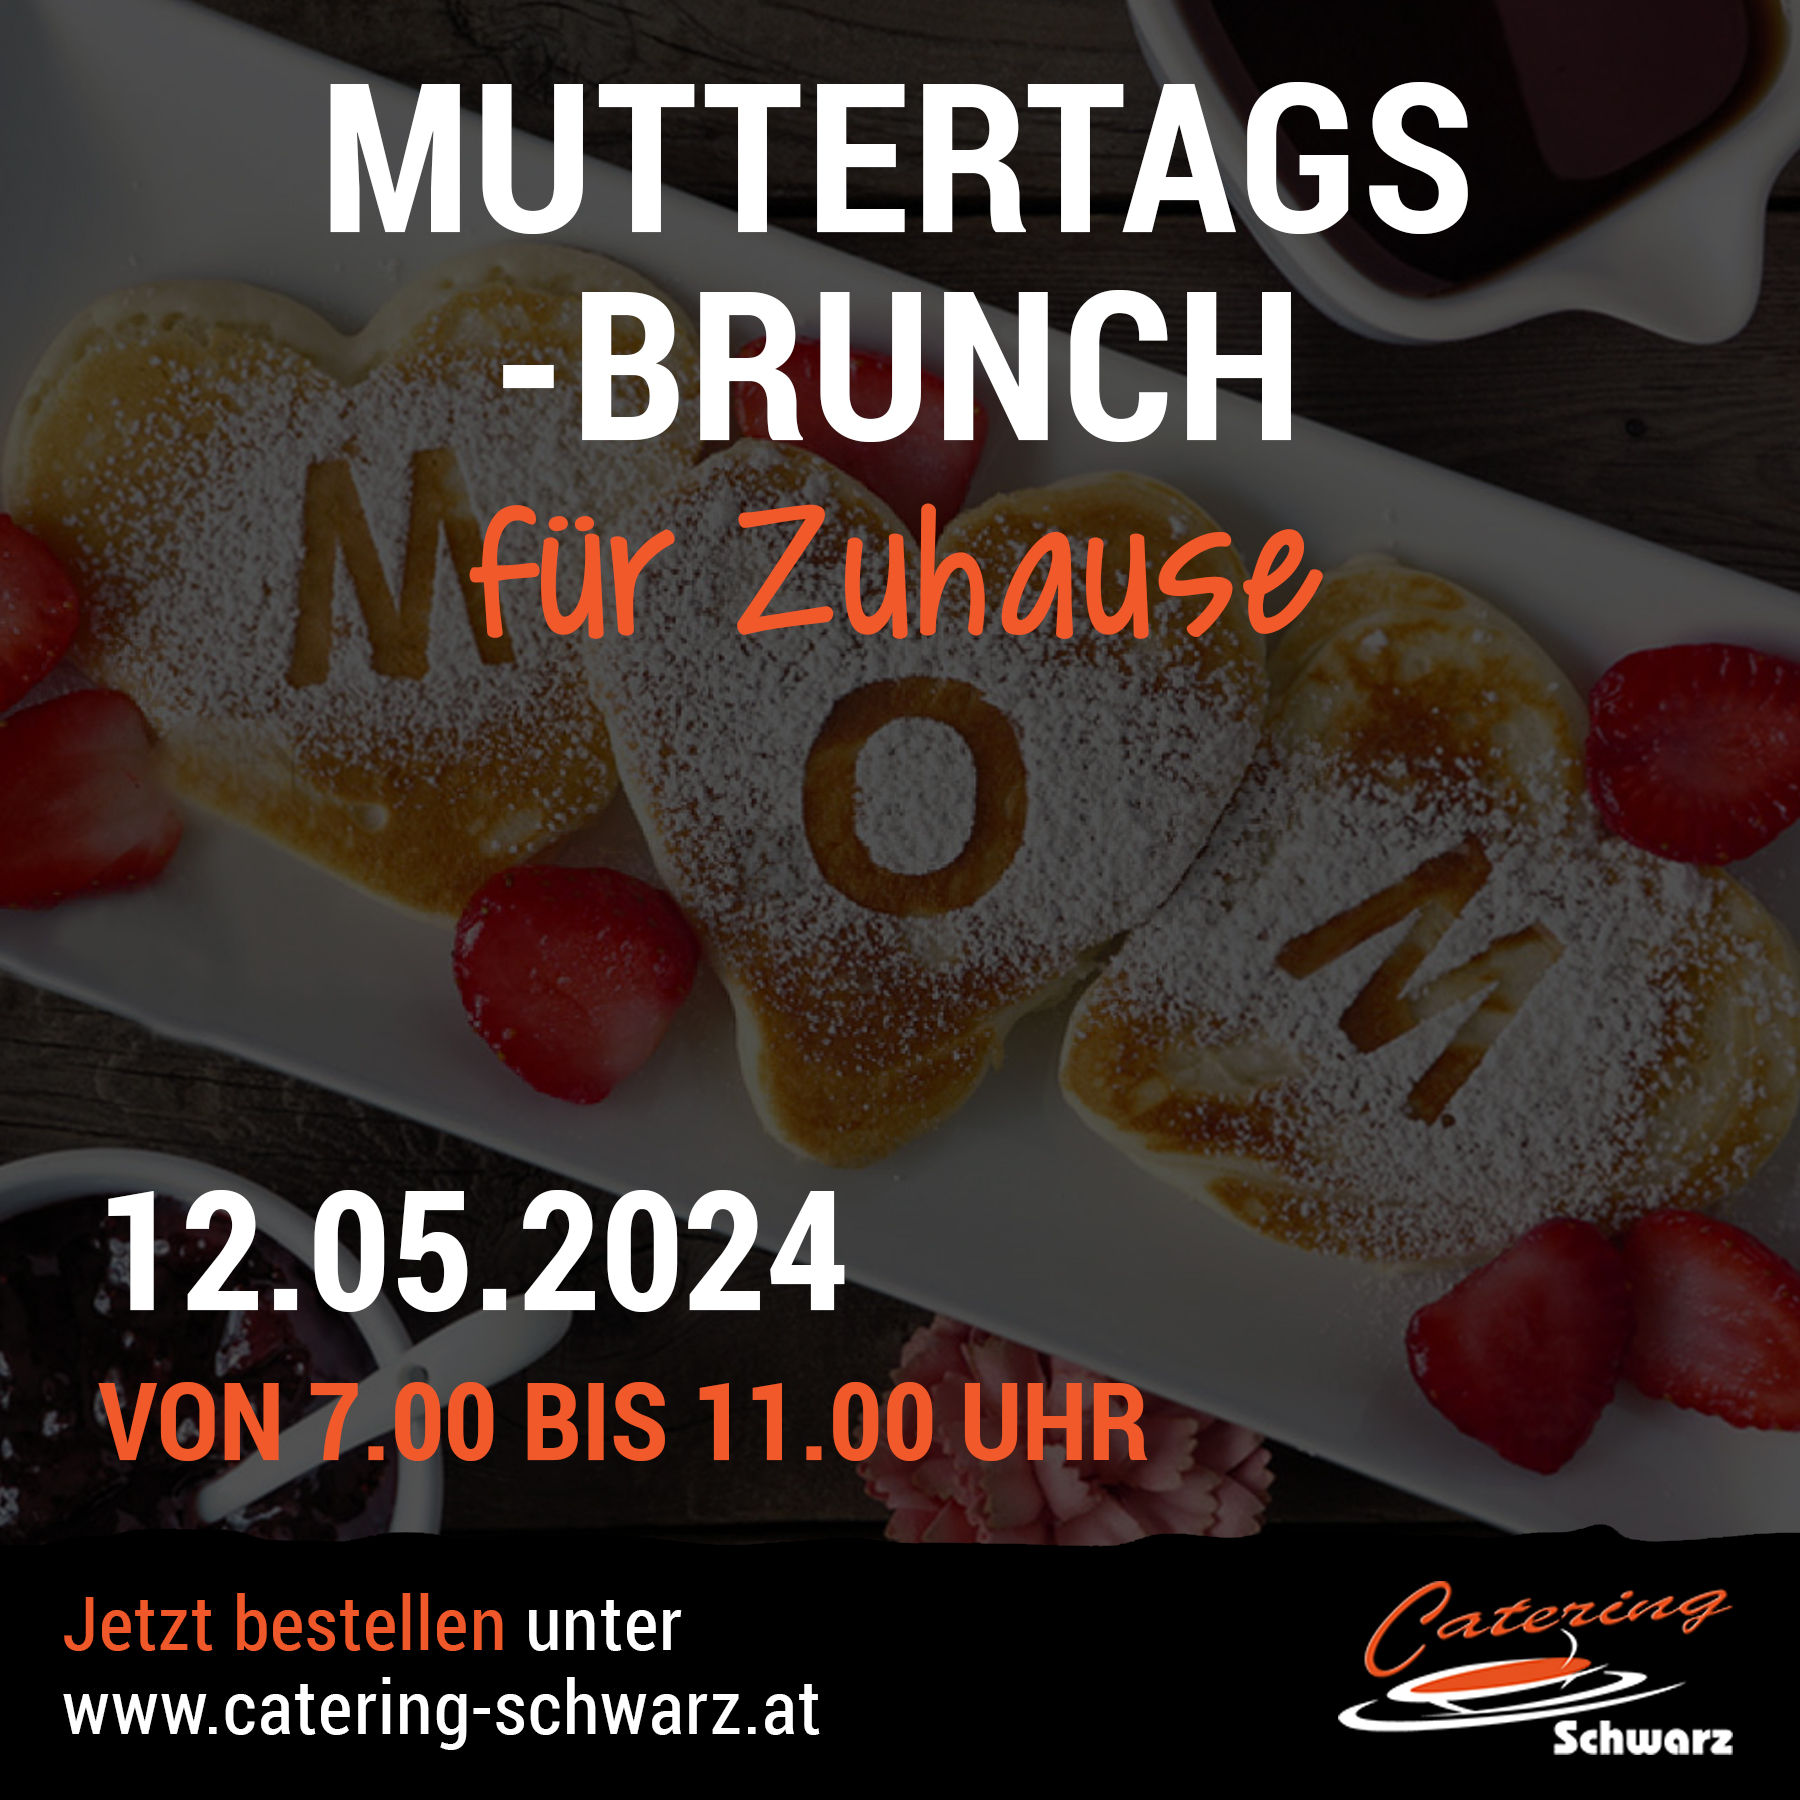 Muttertags-Brunch by Catering Schwarz